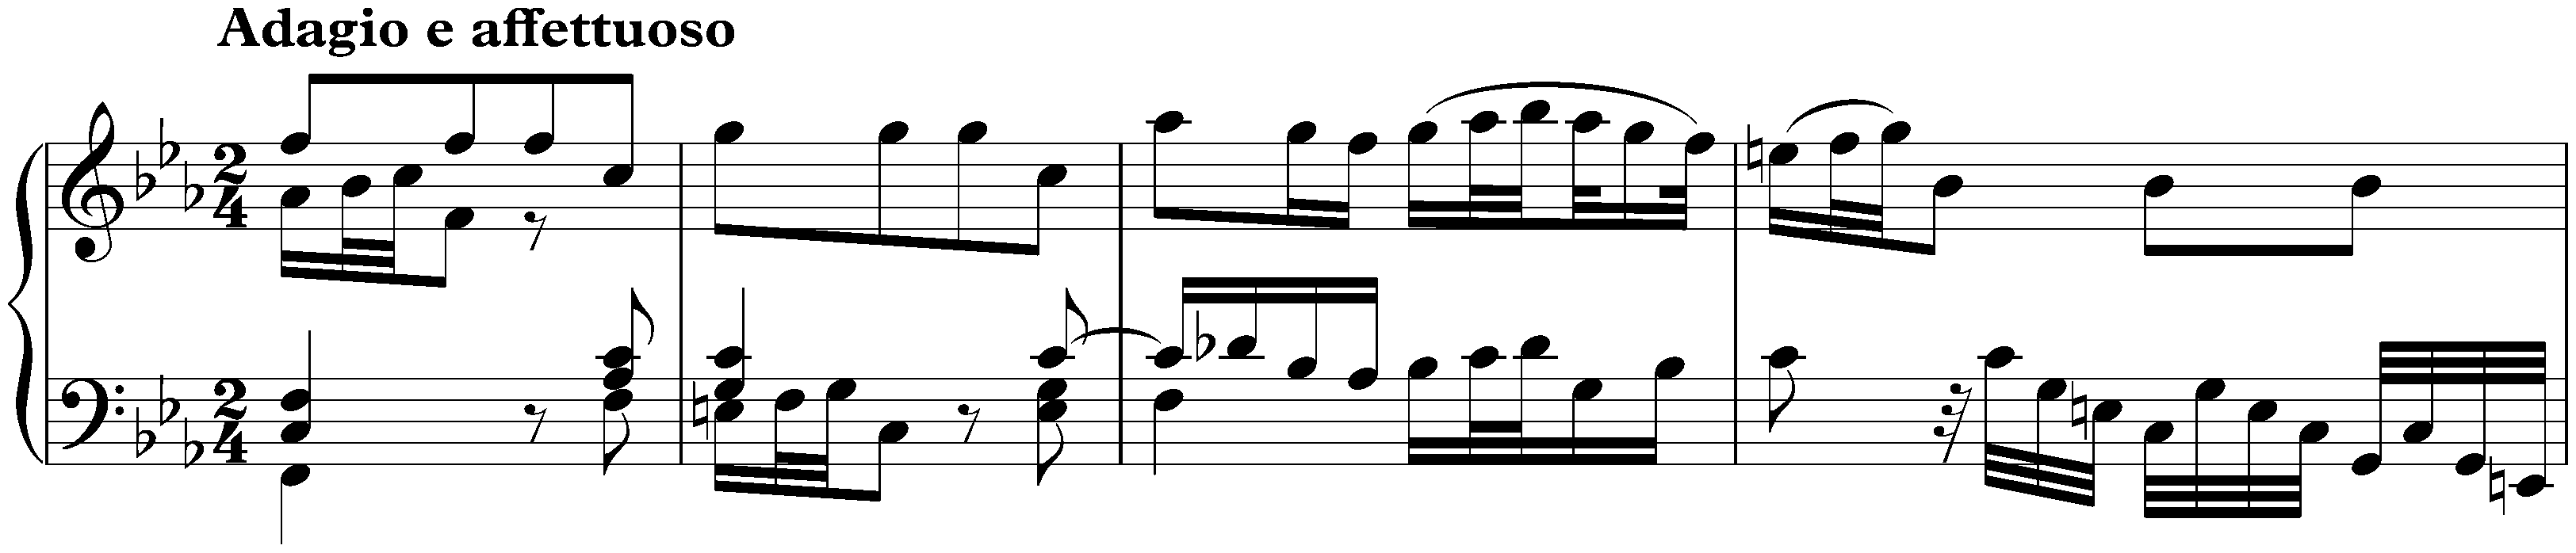 Concerto in C major after Johann Ernst of Saxe-Weimar, BWV 984; 2. Adagio e affettuoso